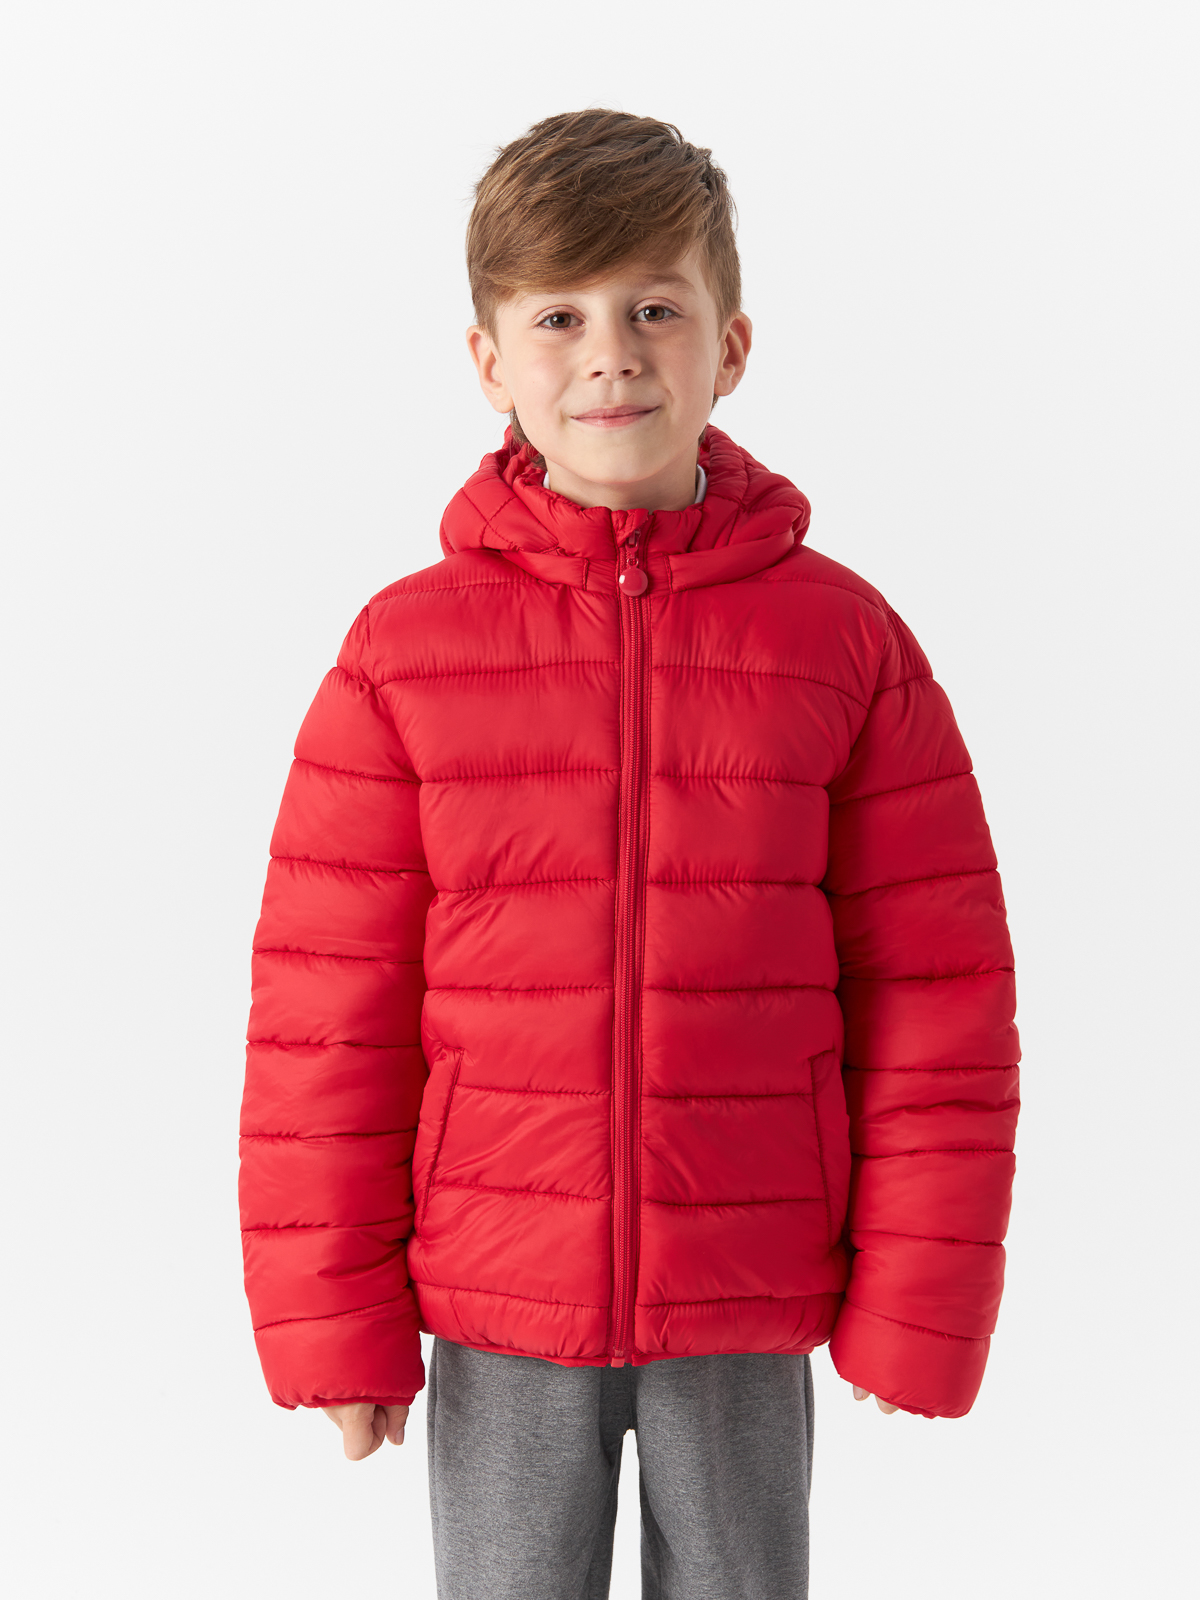 Куртка Mcstyles для мальчиков, размер 152, SMM10, красная